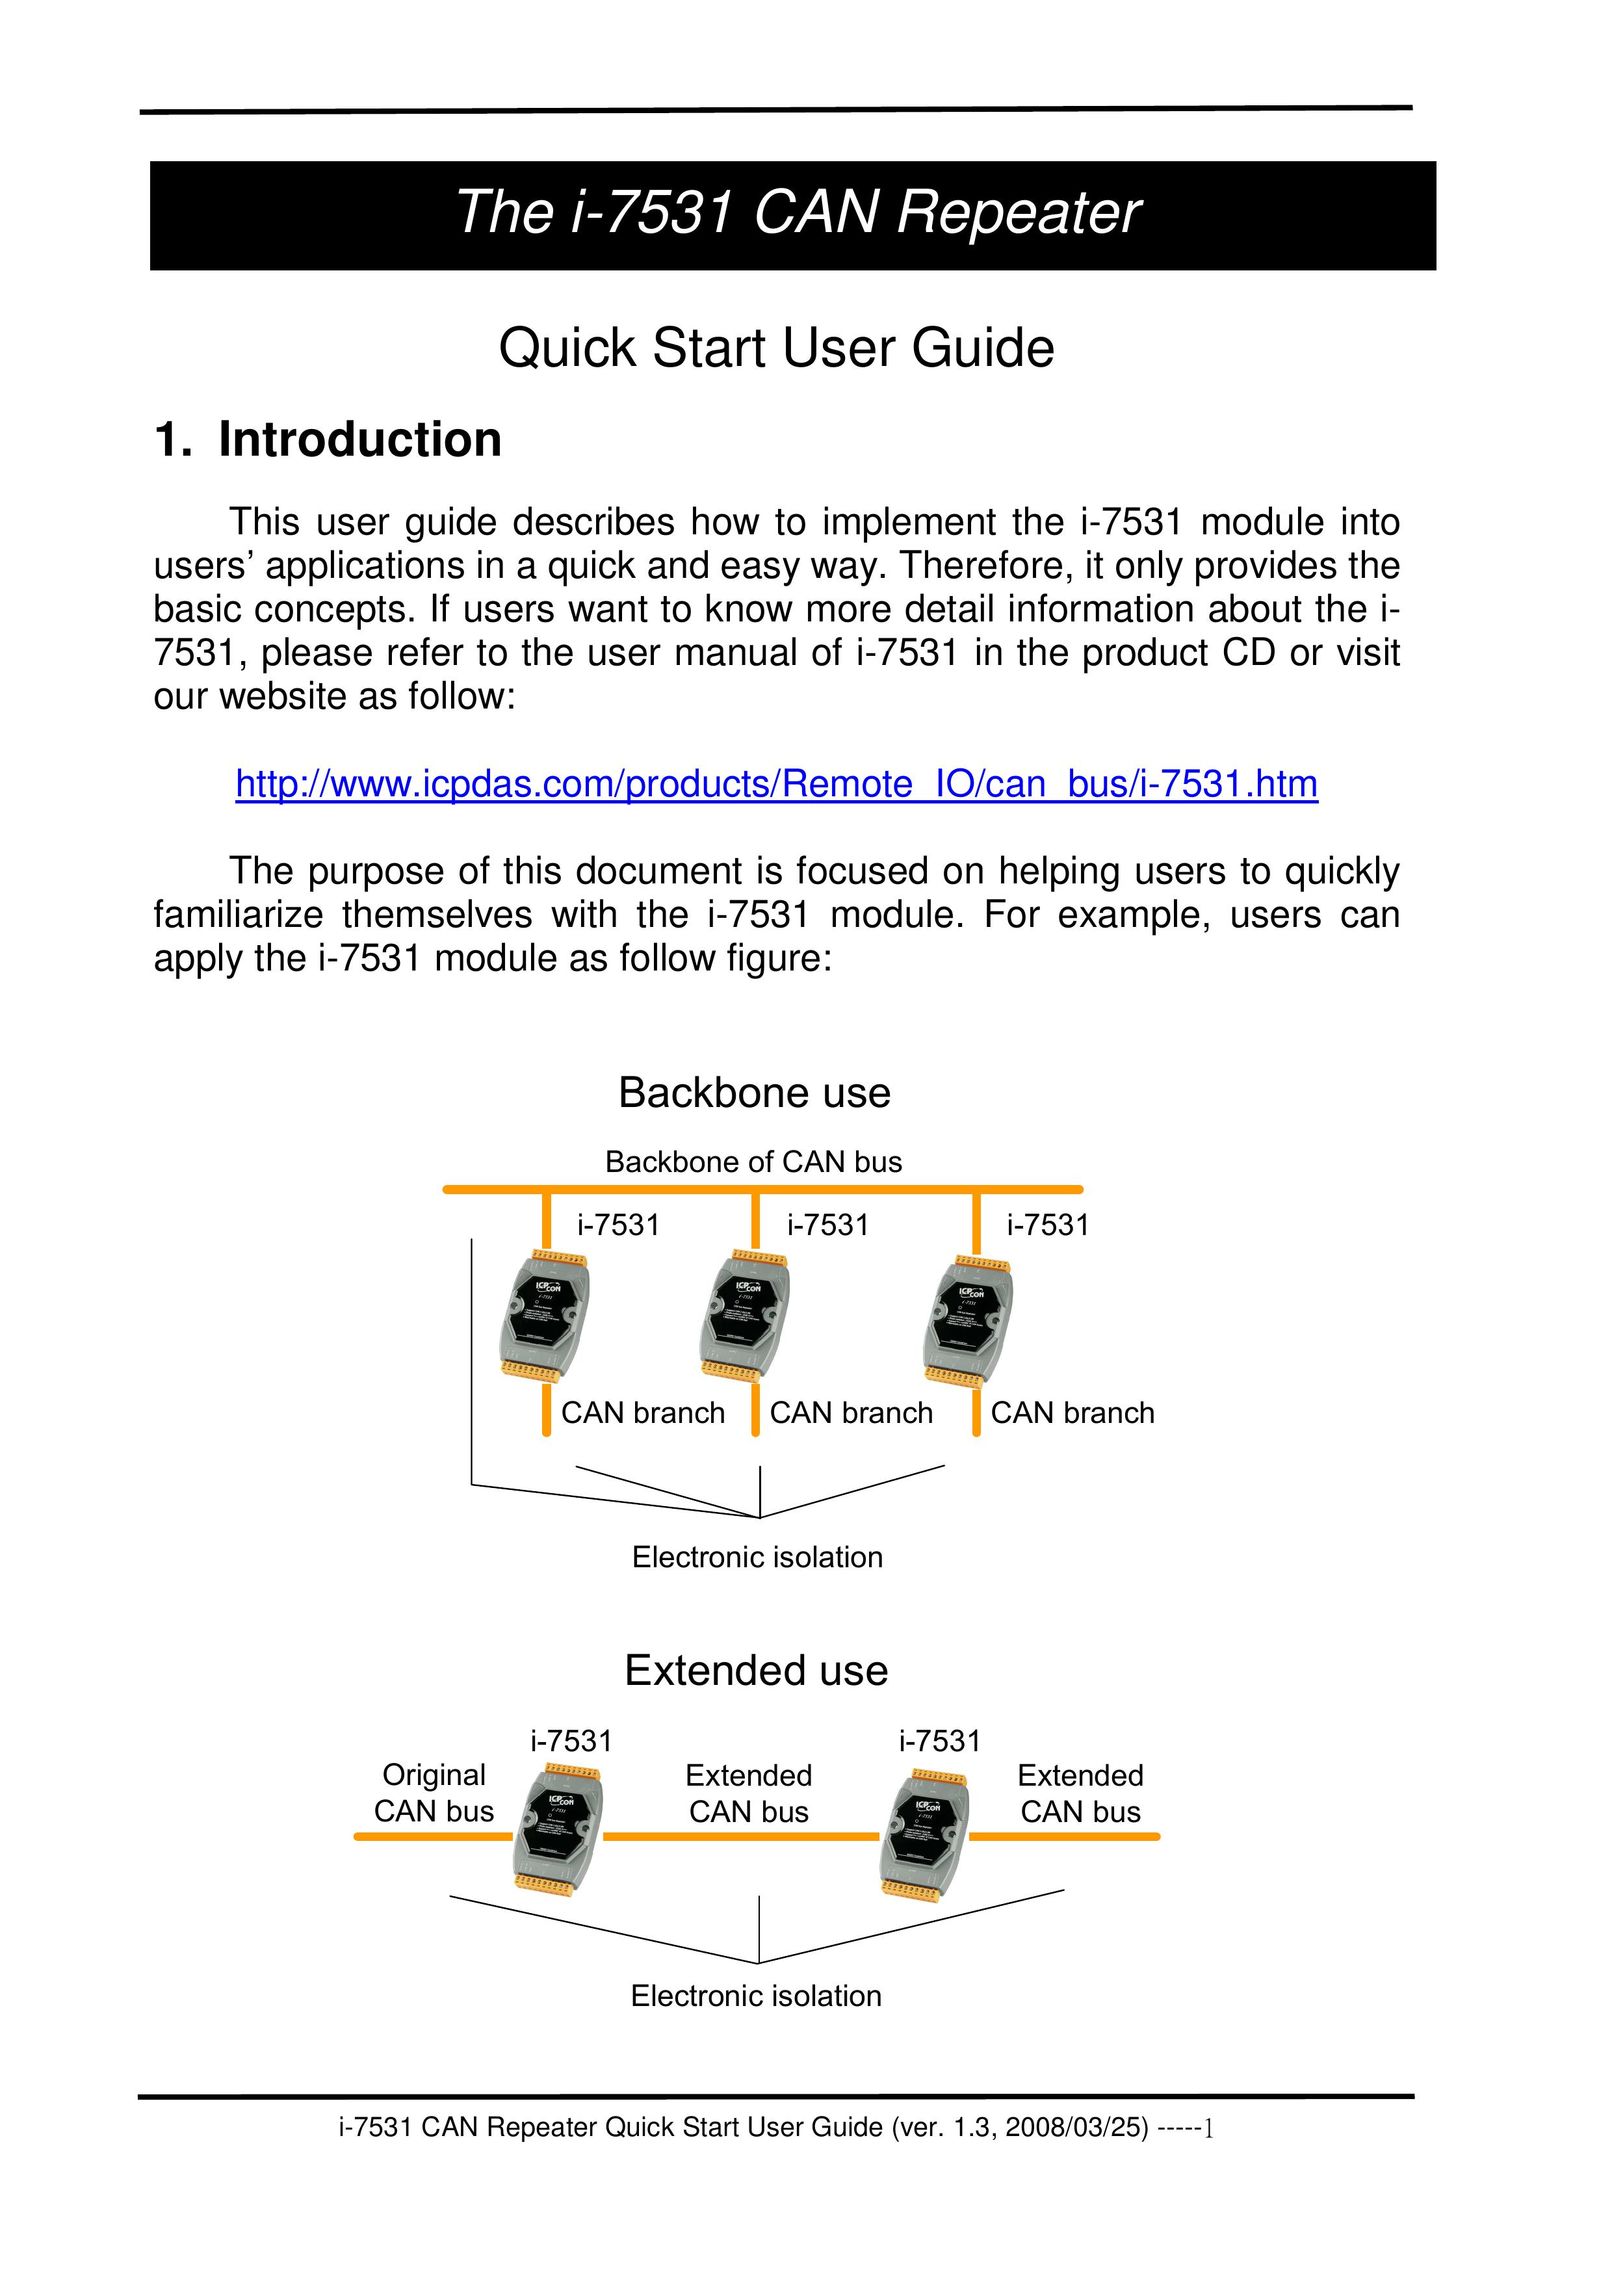 ICP DAS USA I-7531 Network Card User Manual